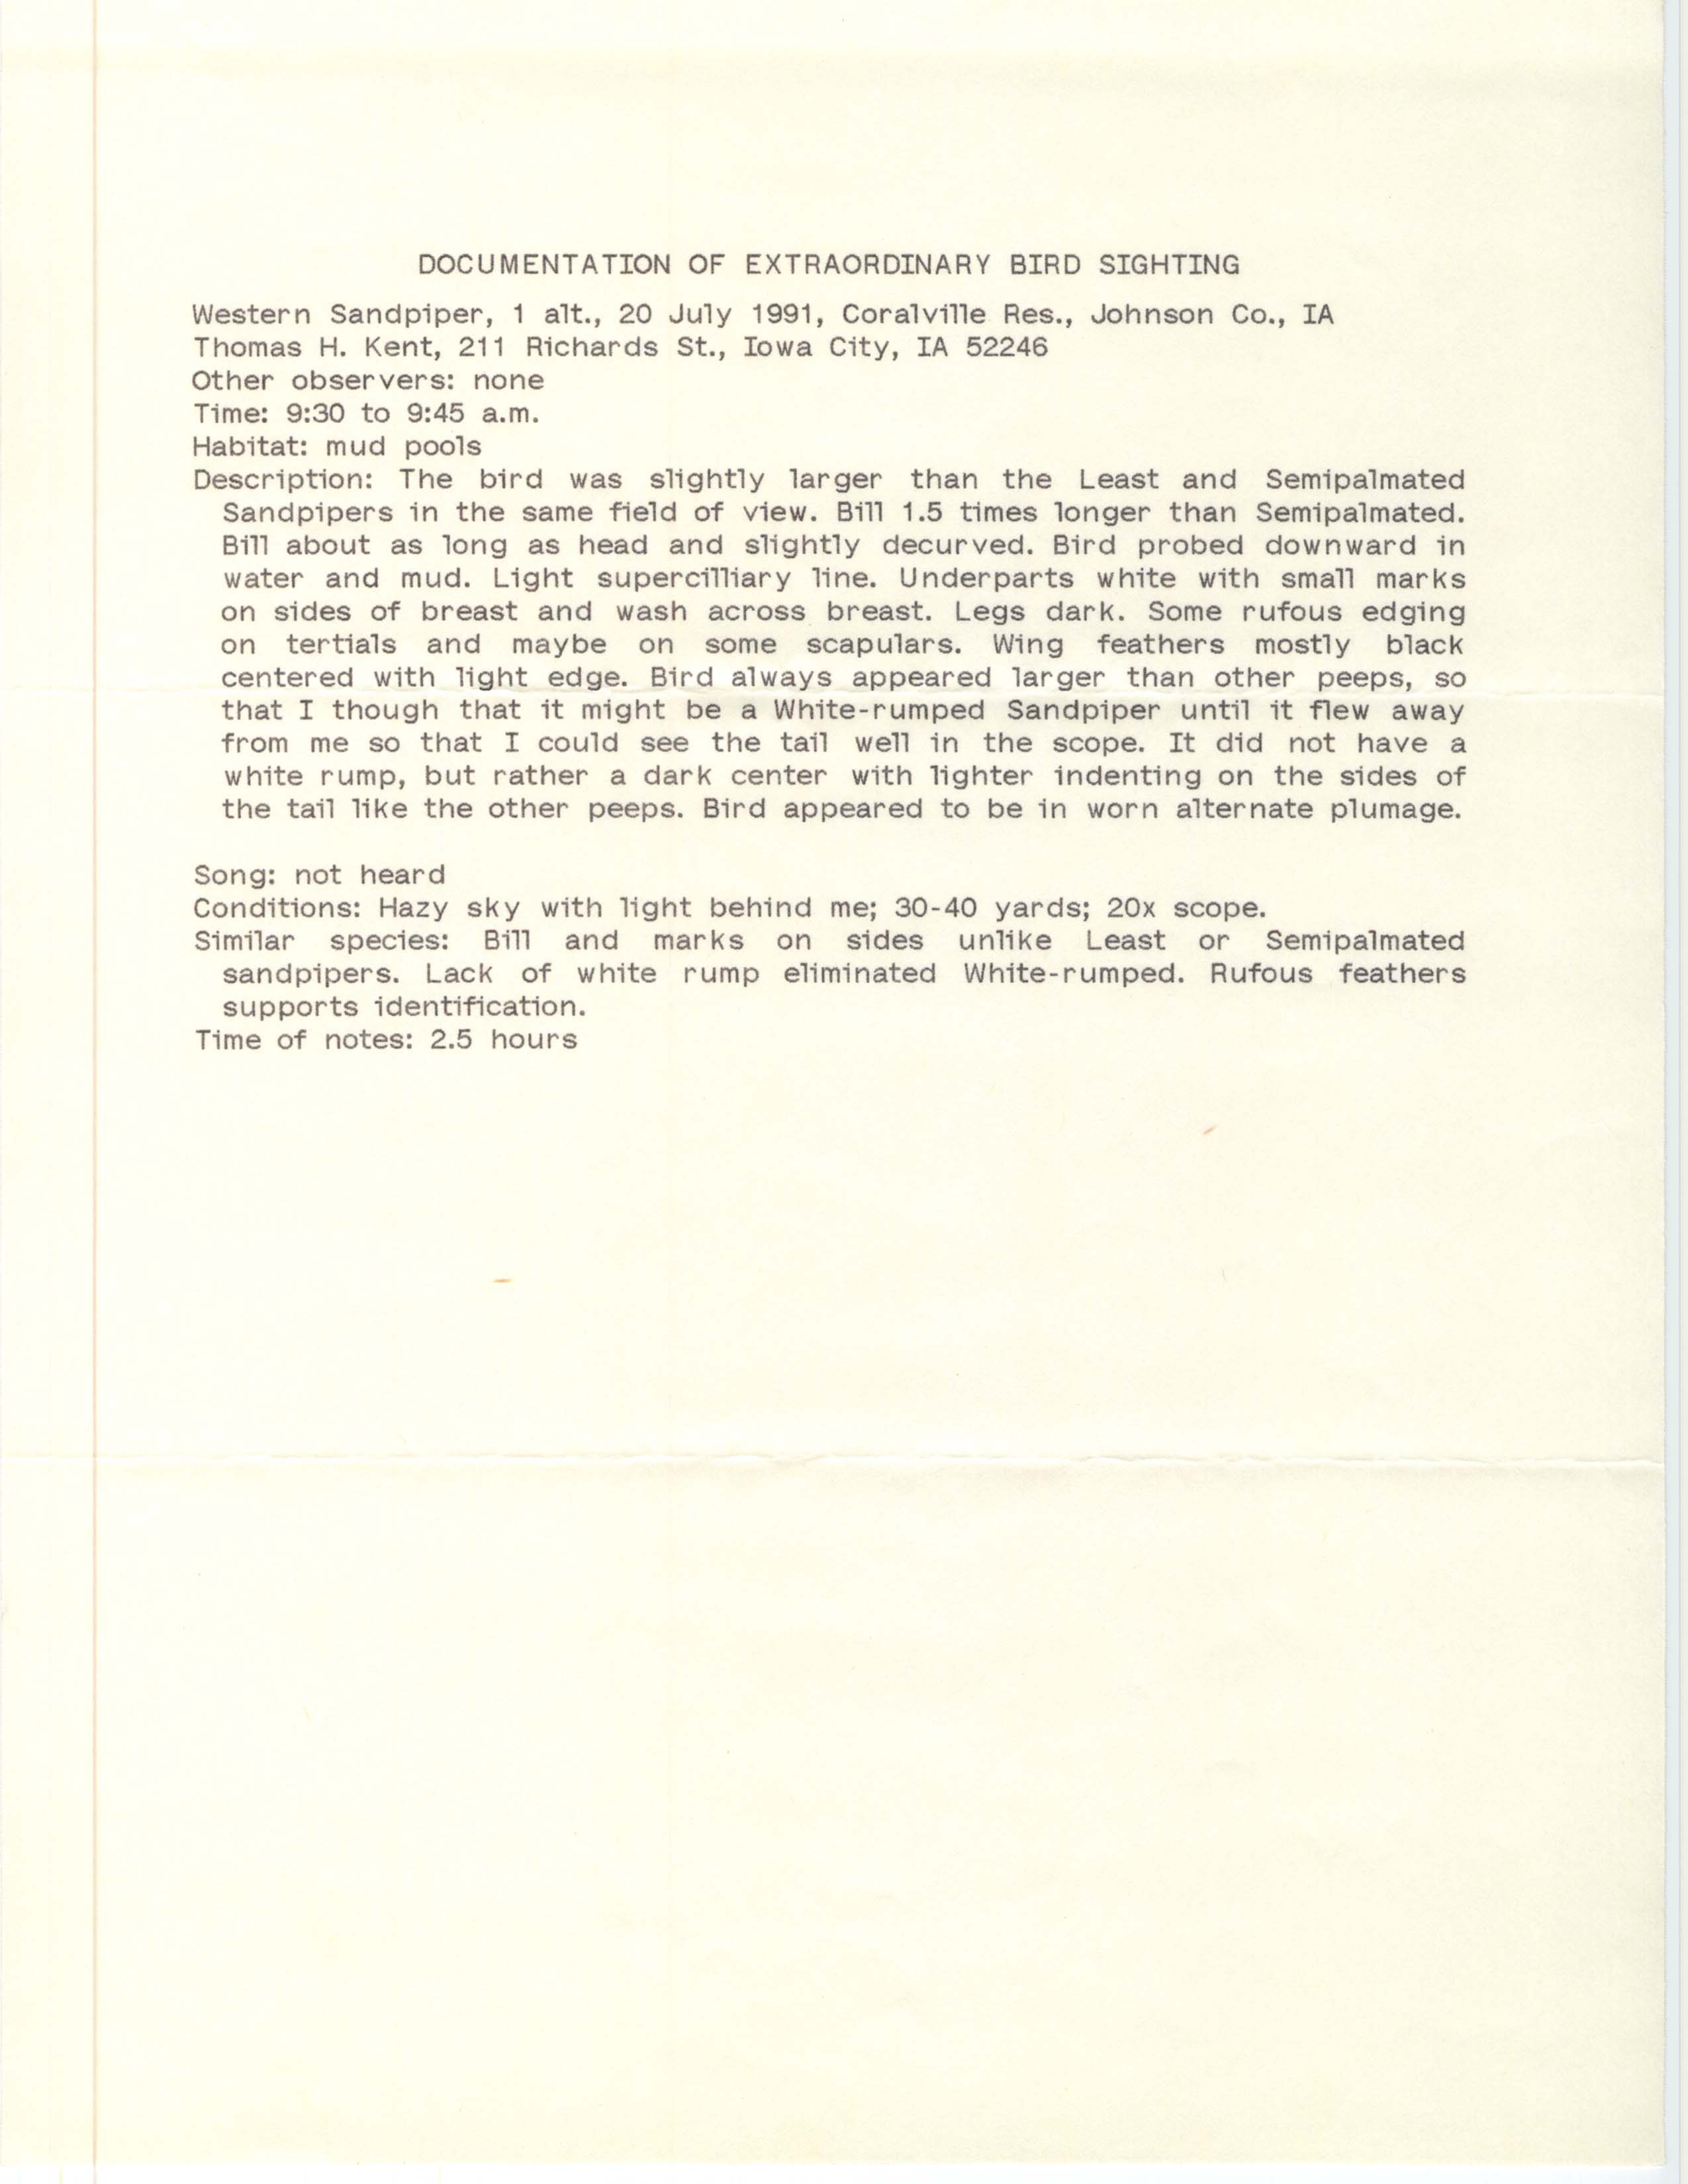 Rare bird documentation form for Western Sandpiper at Coralville Reservoir, 1991